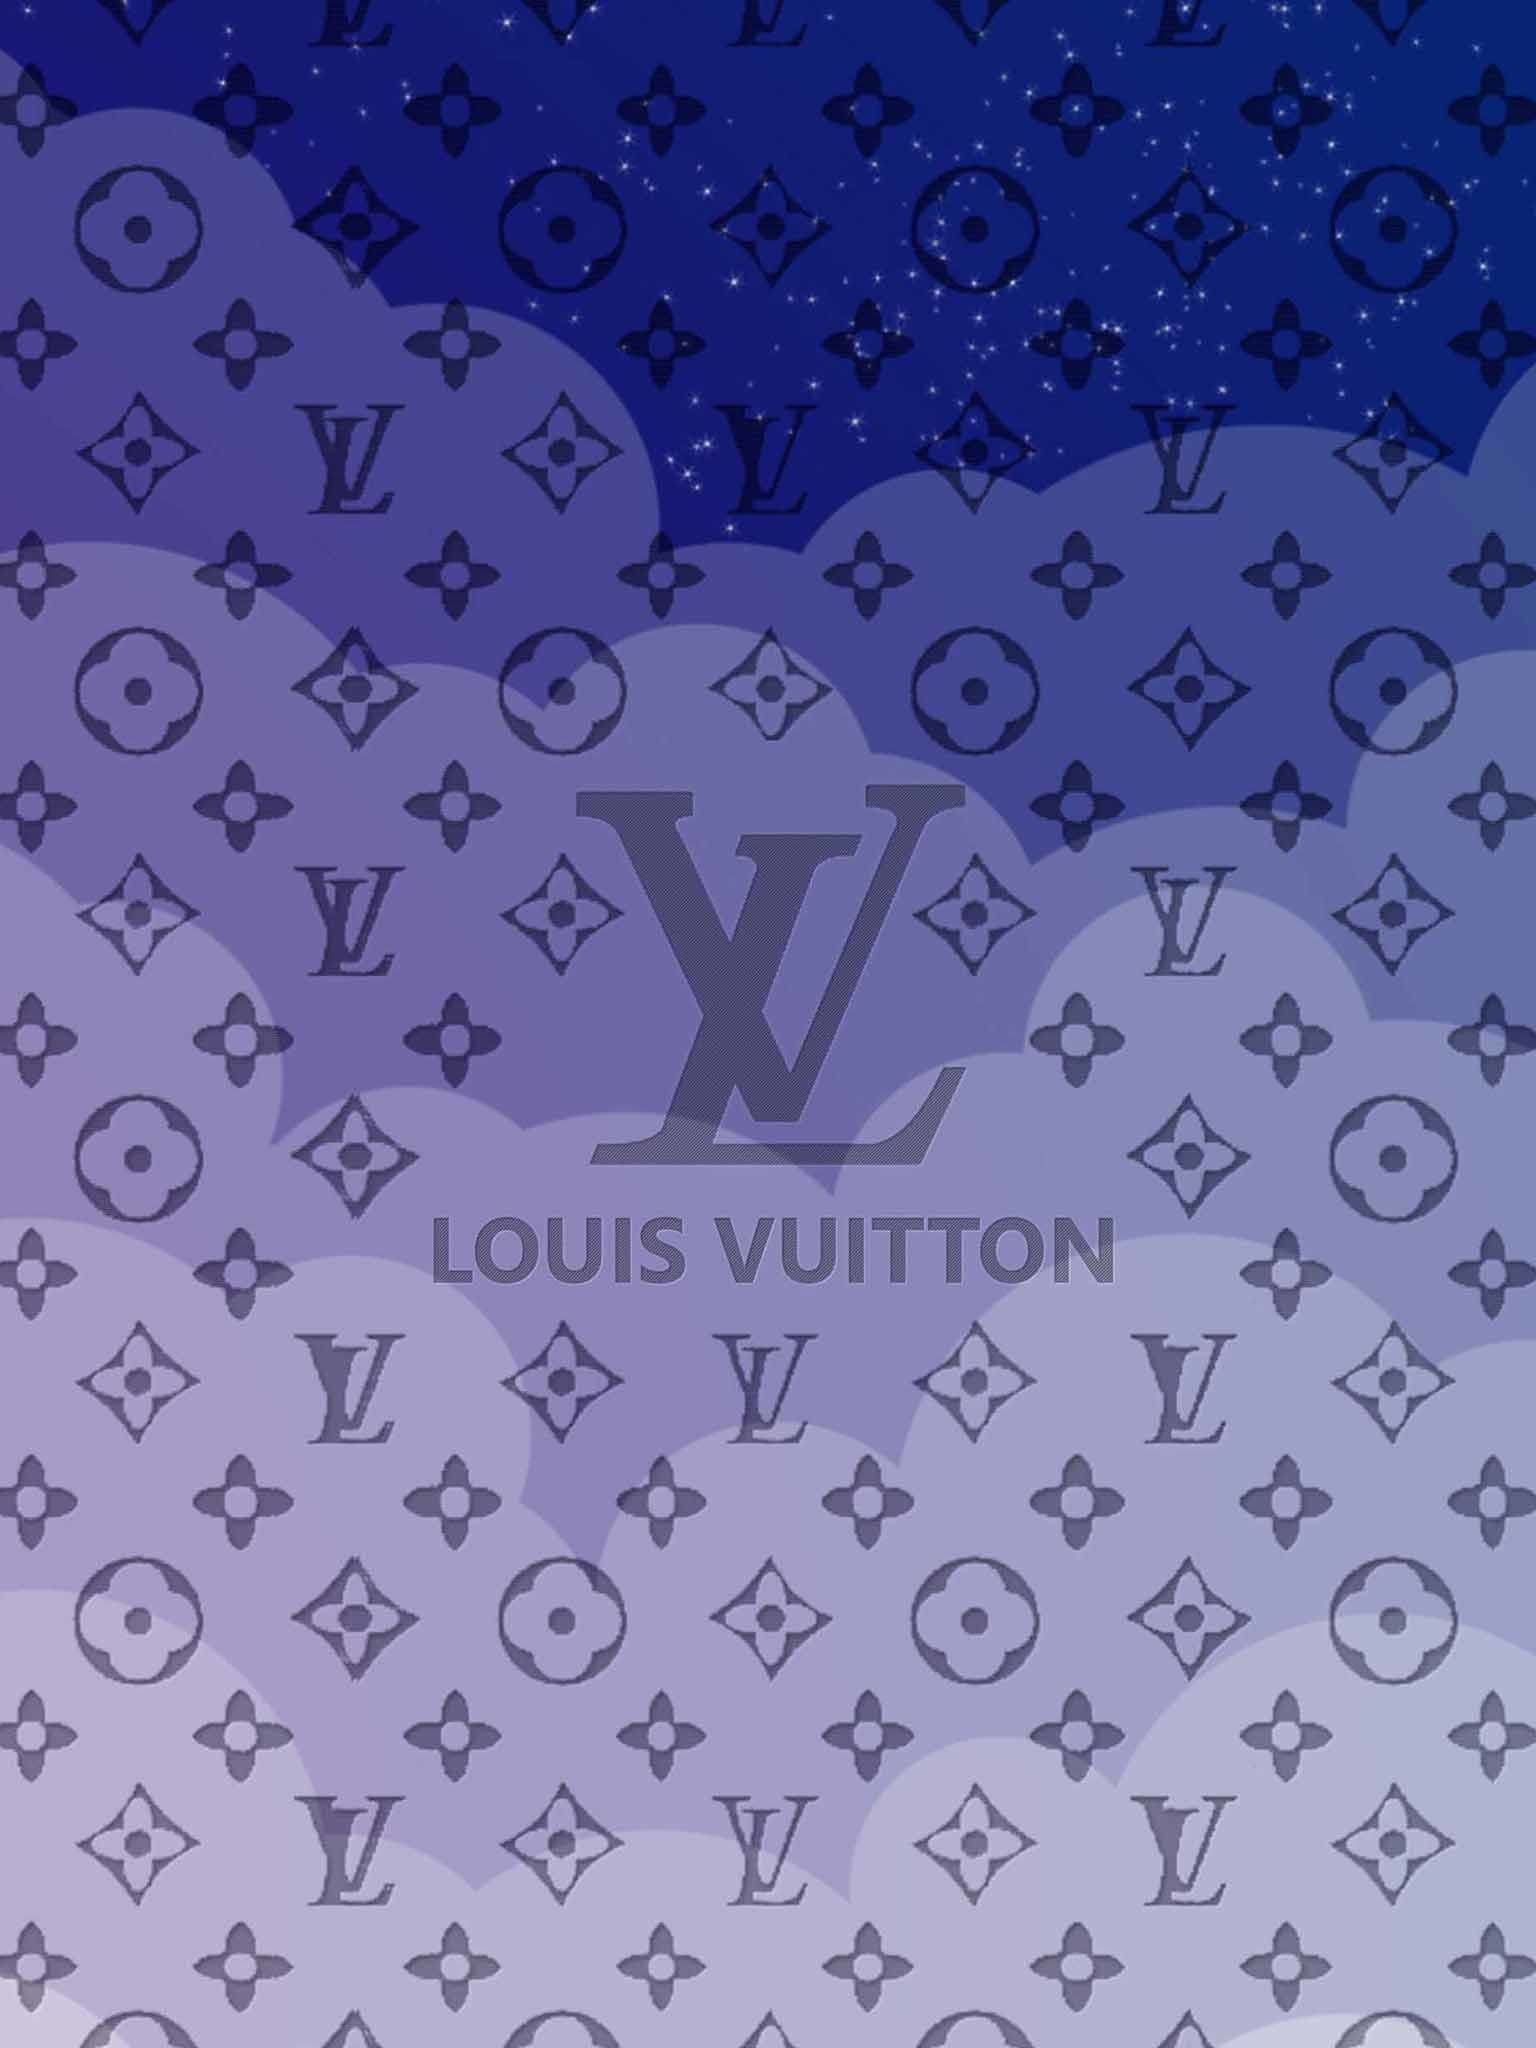 Louis vuitton phone HD wallpapers